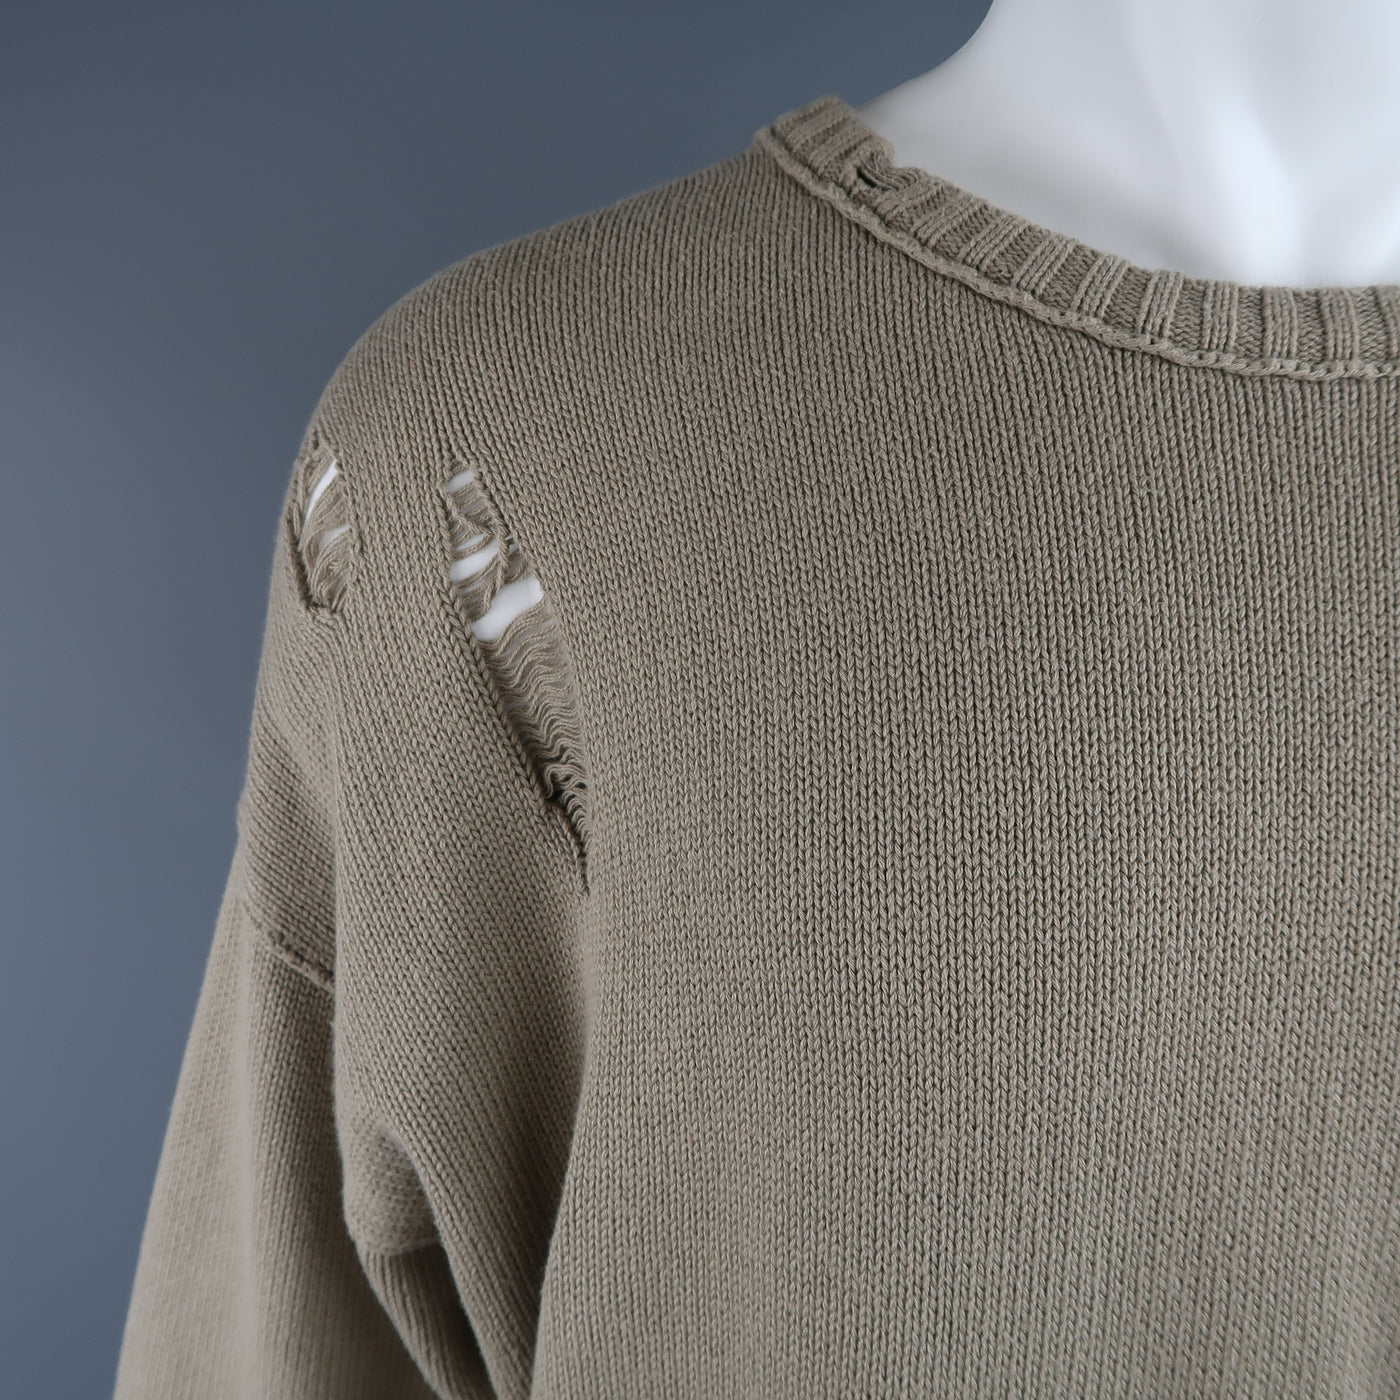 ISABEL BENENATO Size L Beige Distressed Destroyed Cotton Pullover Sweater